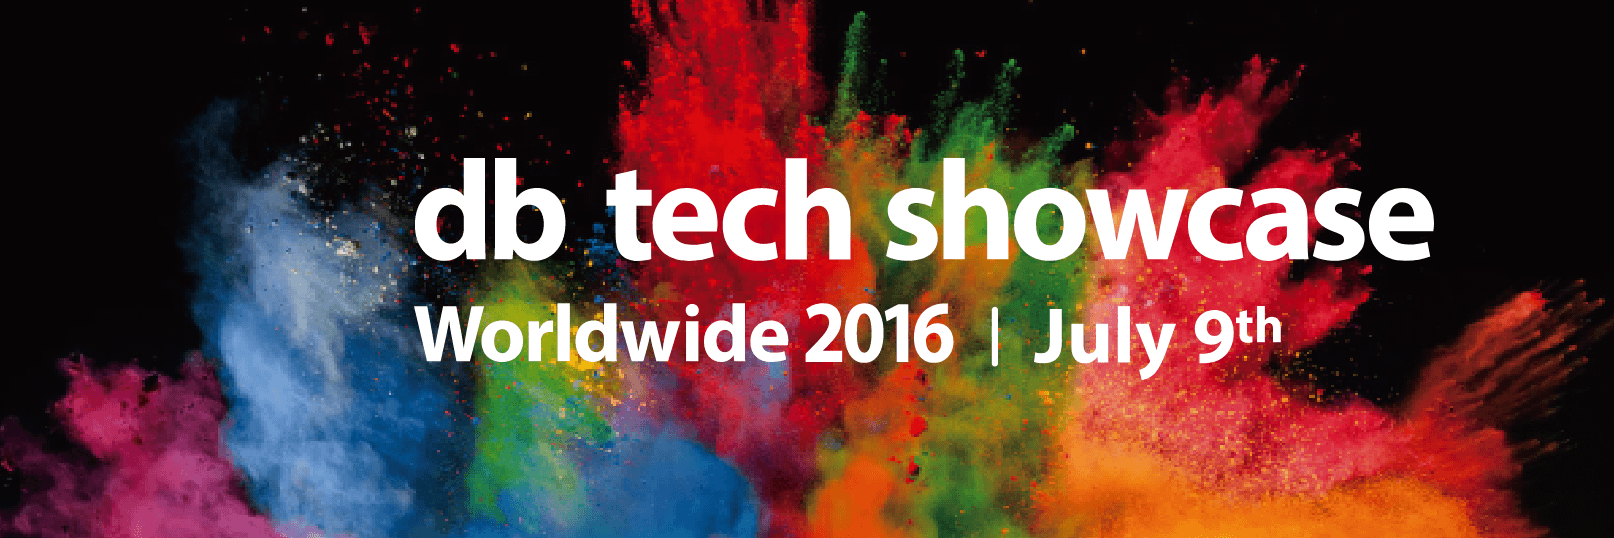 db tech showcase Worldwide 2016